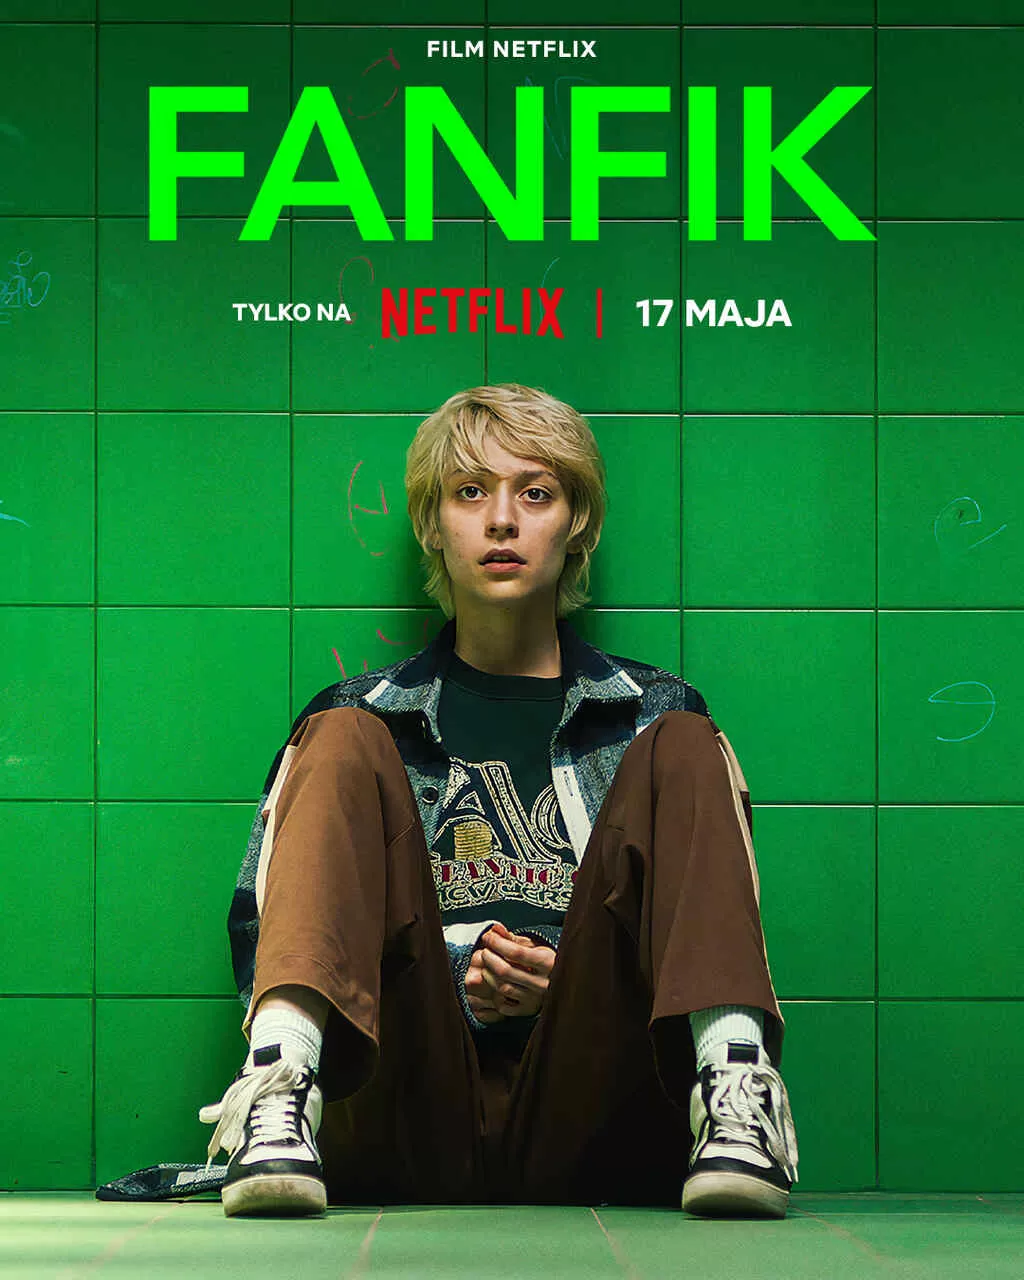 Fanfic (2023) แฟนฟิค ดูหนังออนไลน์ HD